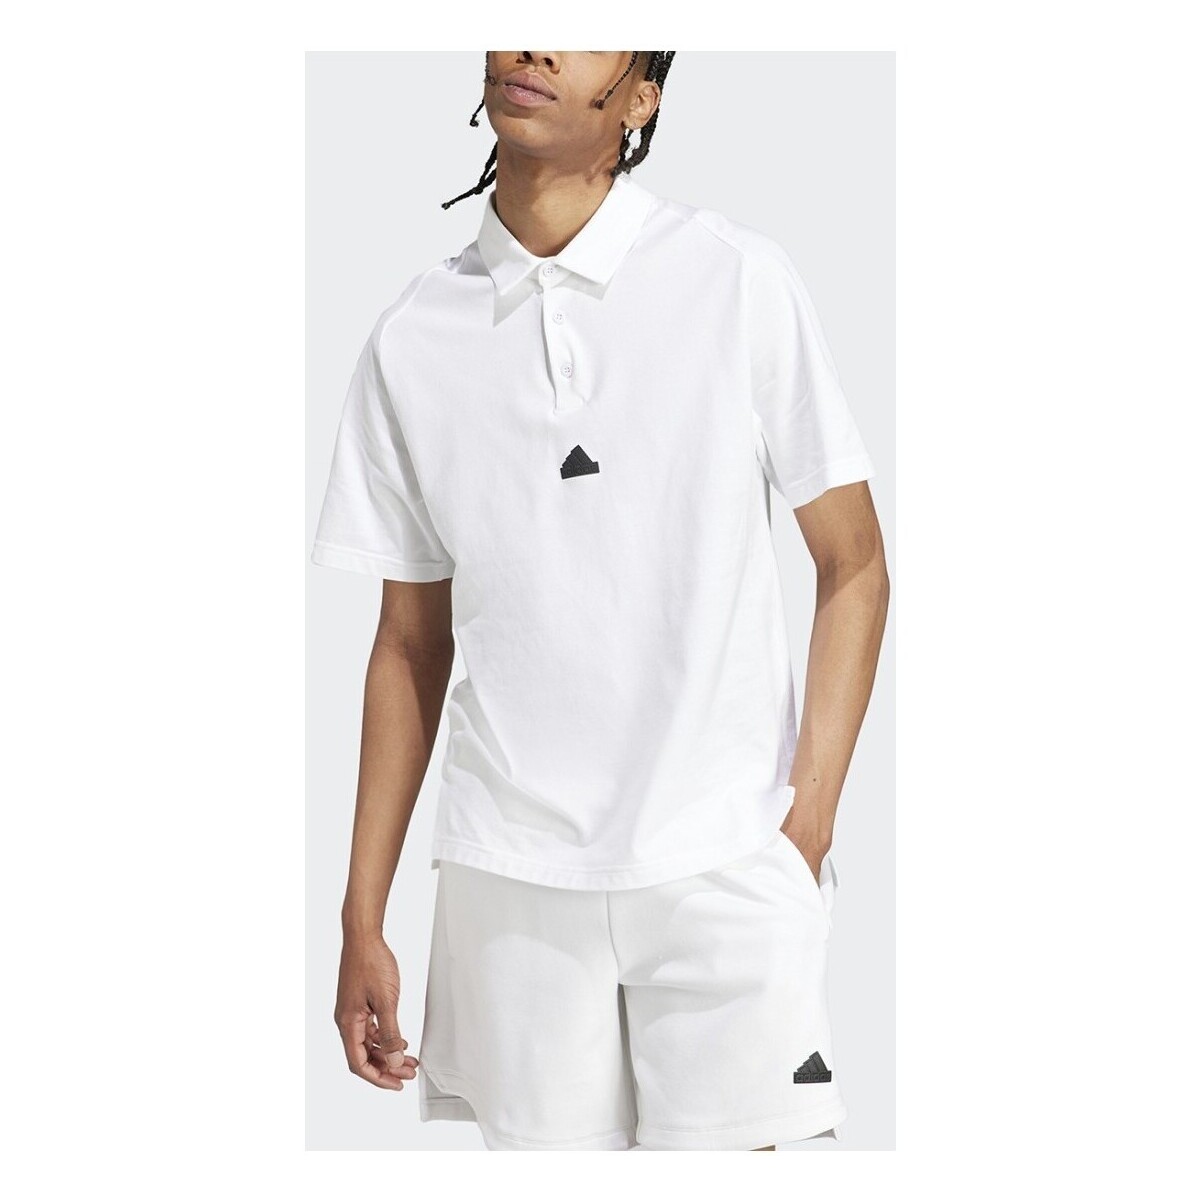 Kleidung Herren T-Shirts & Poloshirts adidas Originals  Weiss